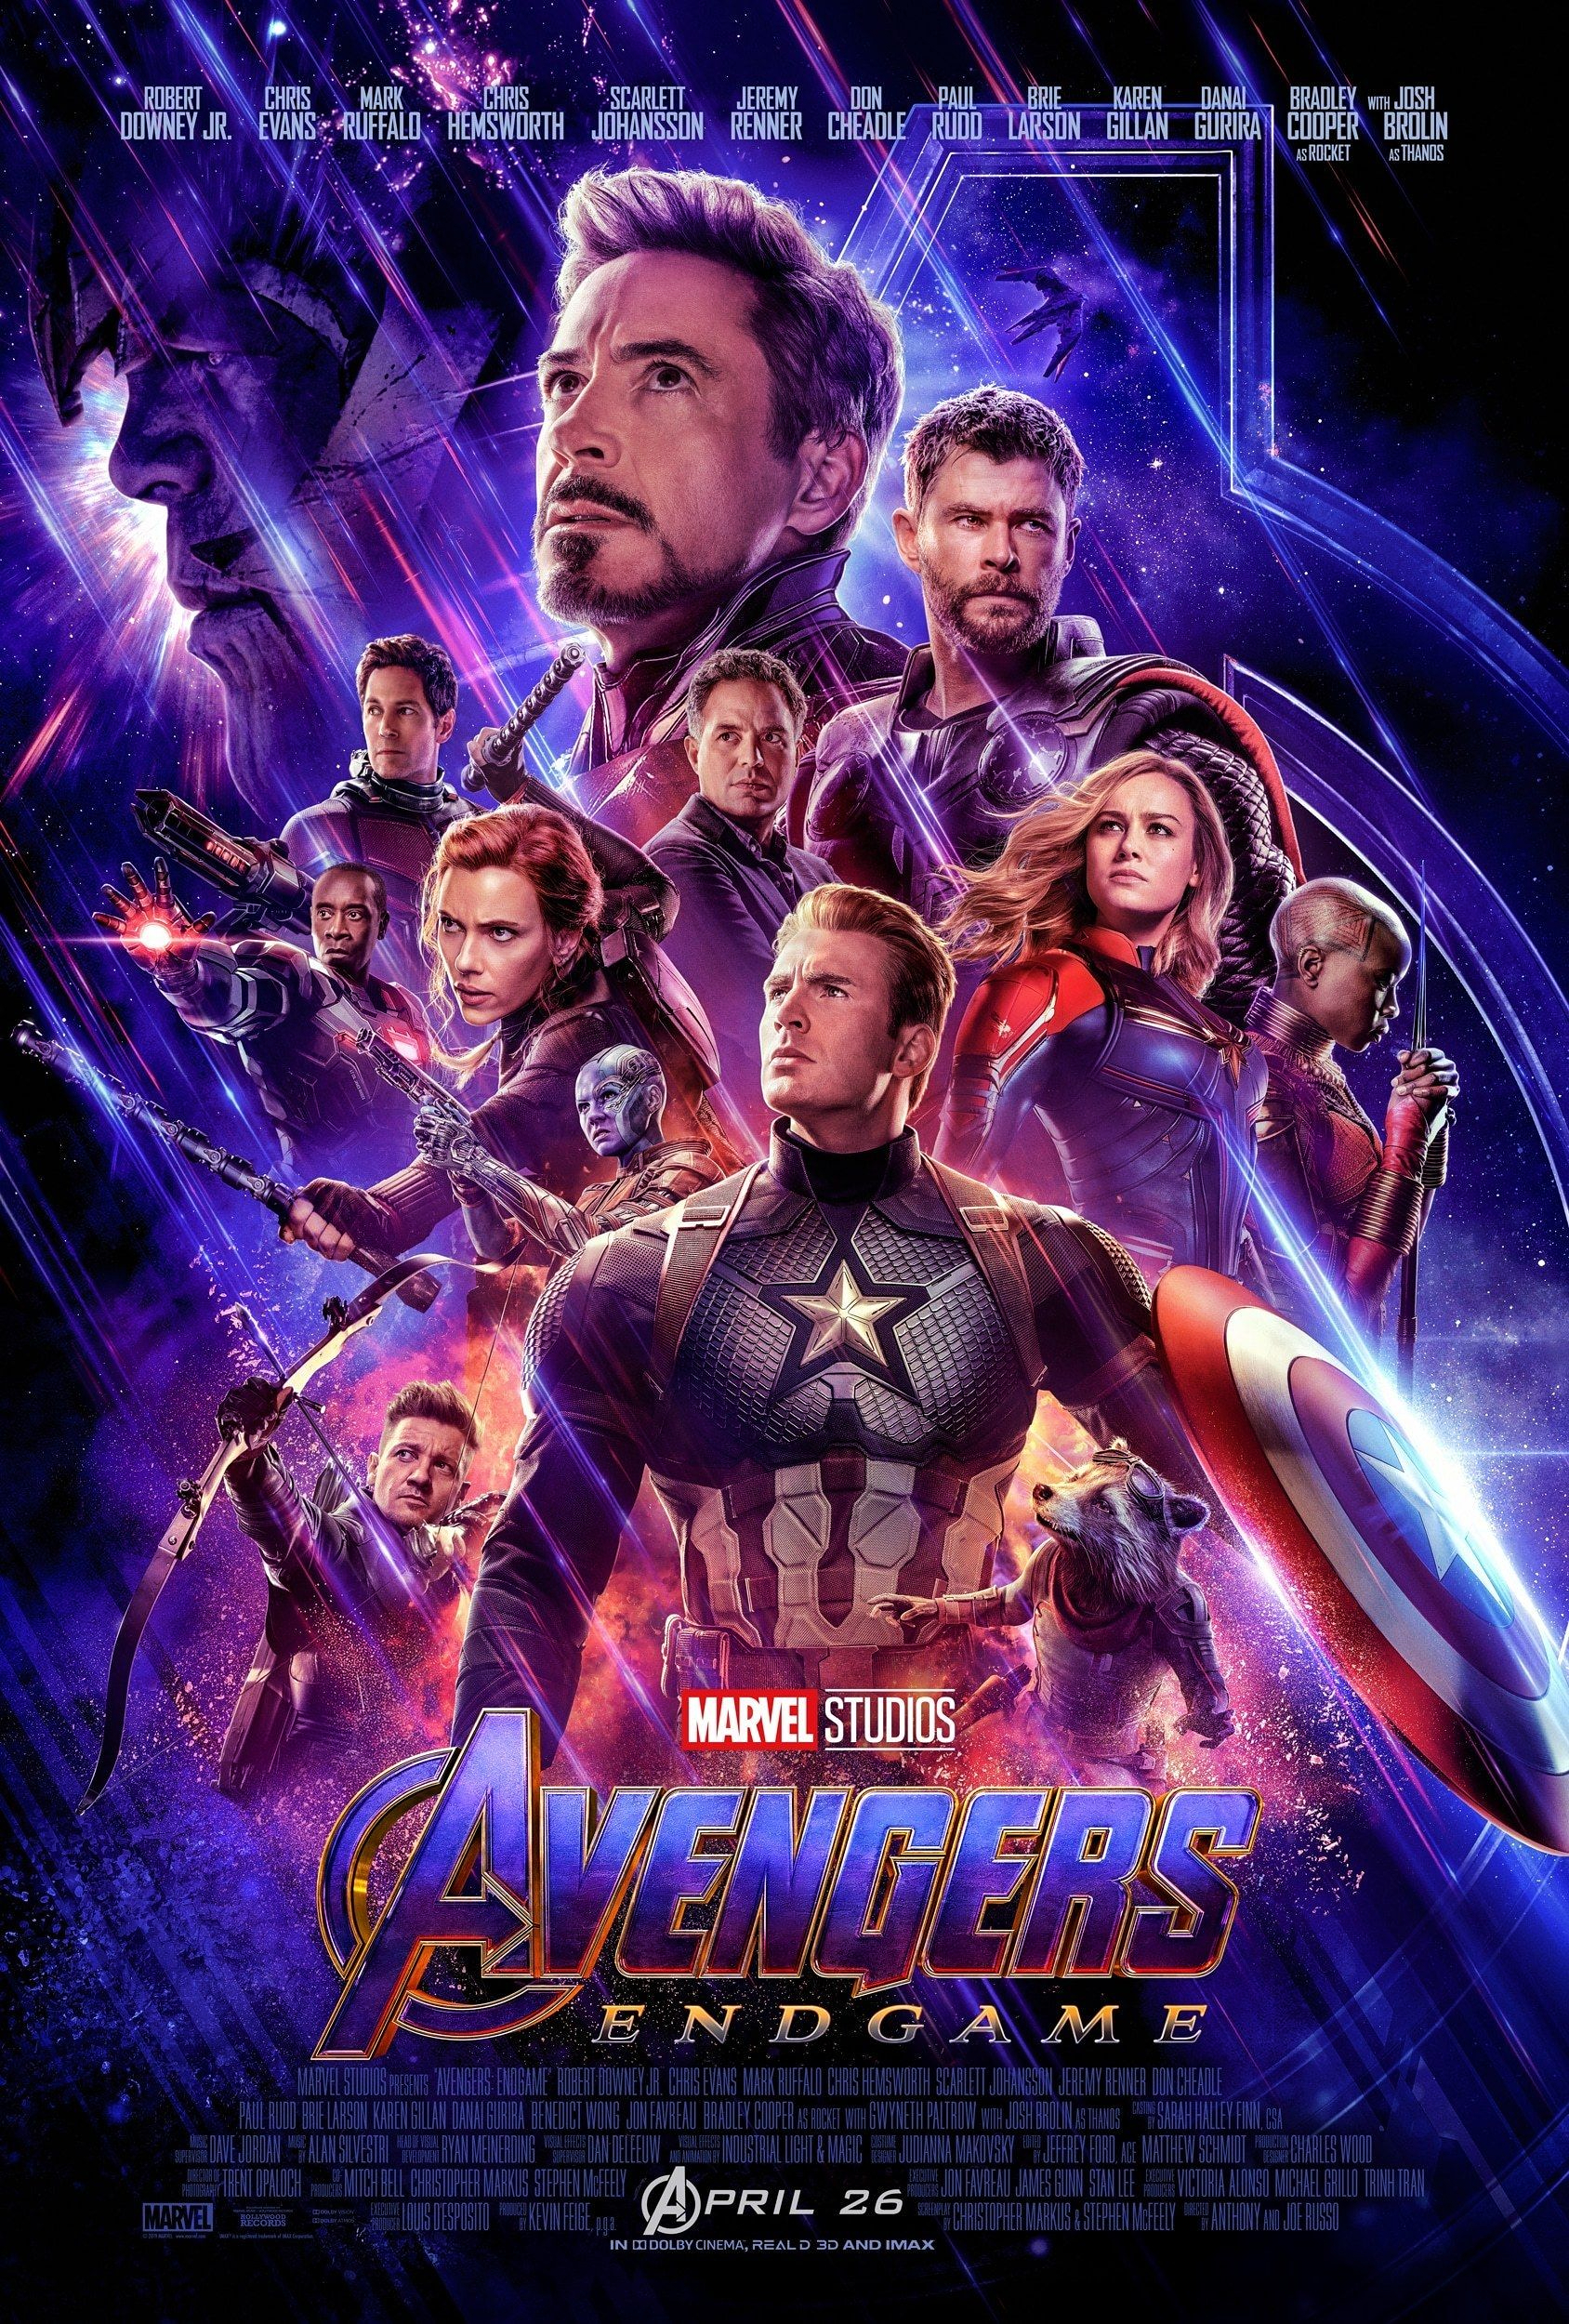 Avengers Endgame Poster New 2019 Movie Marvel Superheros FREE P+P CHOOSE UR SIZE 